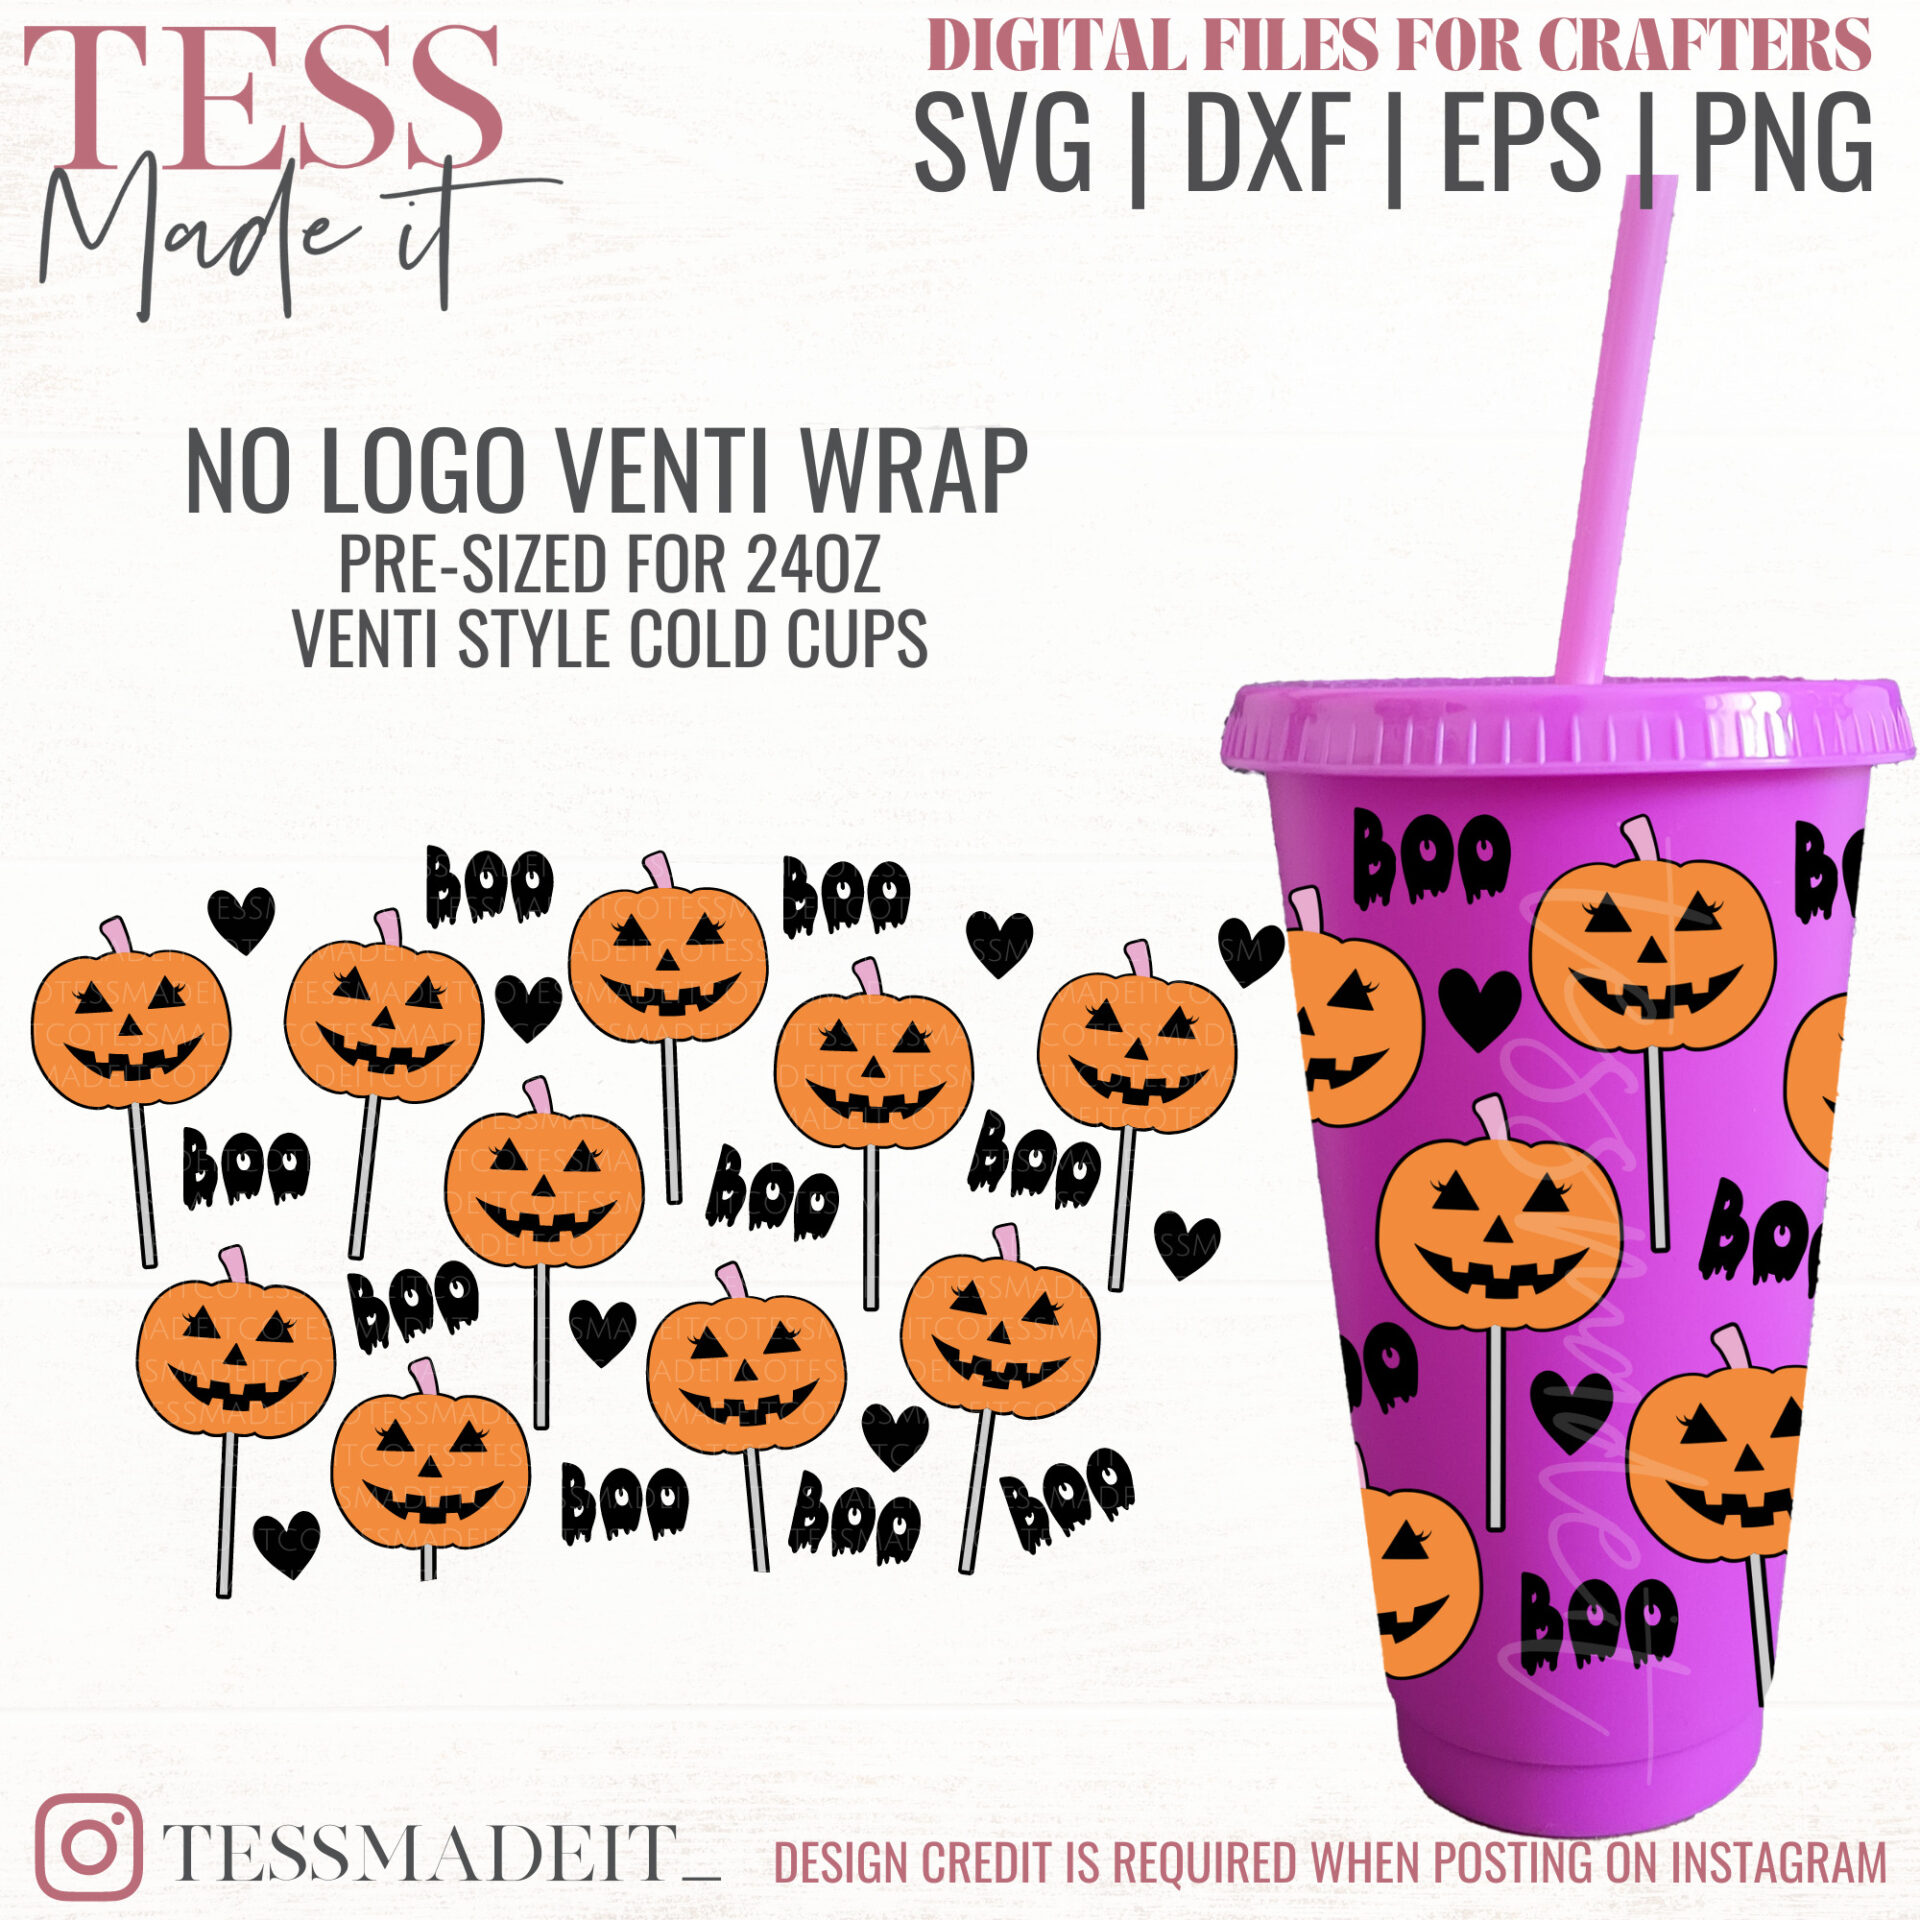 Pumpkin Cold Cup SVG - Starbucks SVG No Hole - Tess Made It